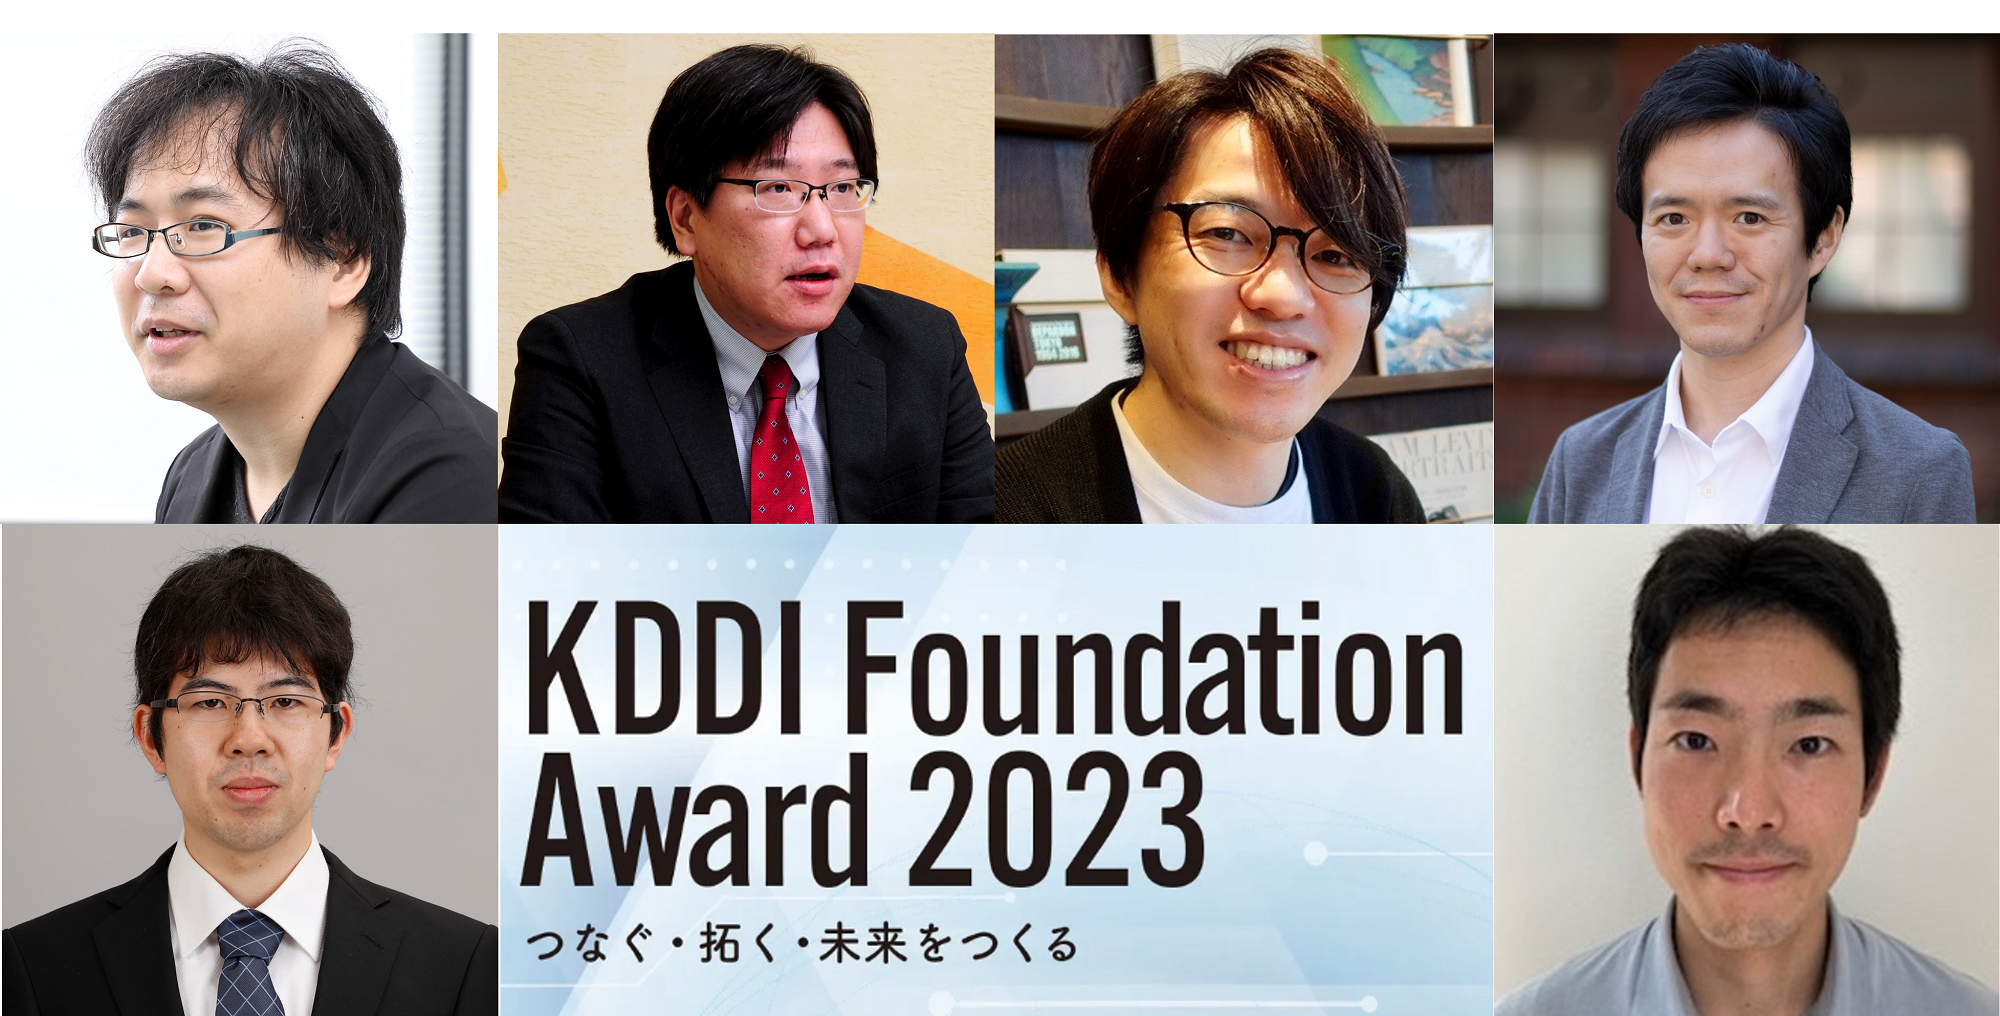 「KDDI Foundation Award 2023」受賞者の決定について